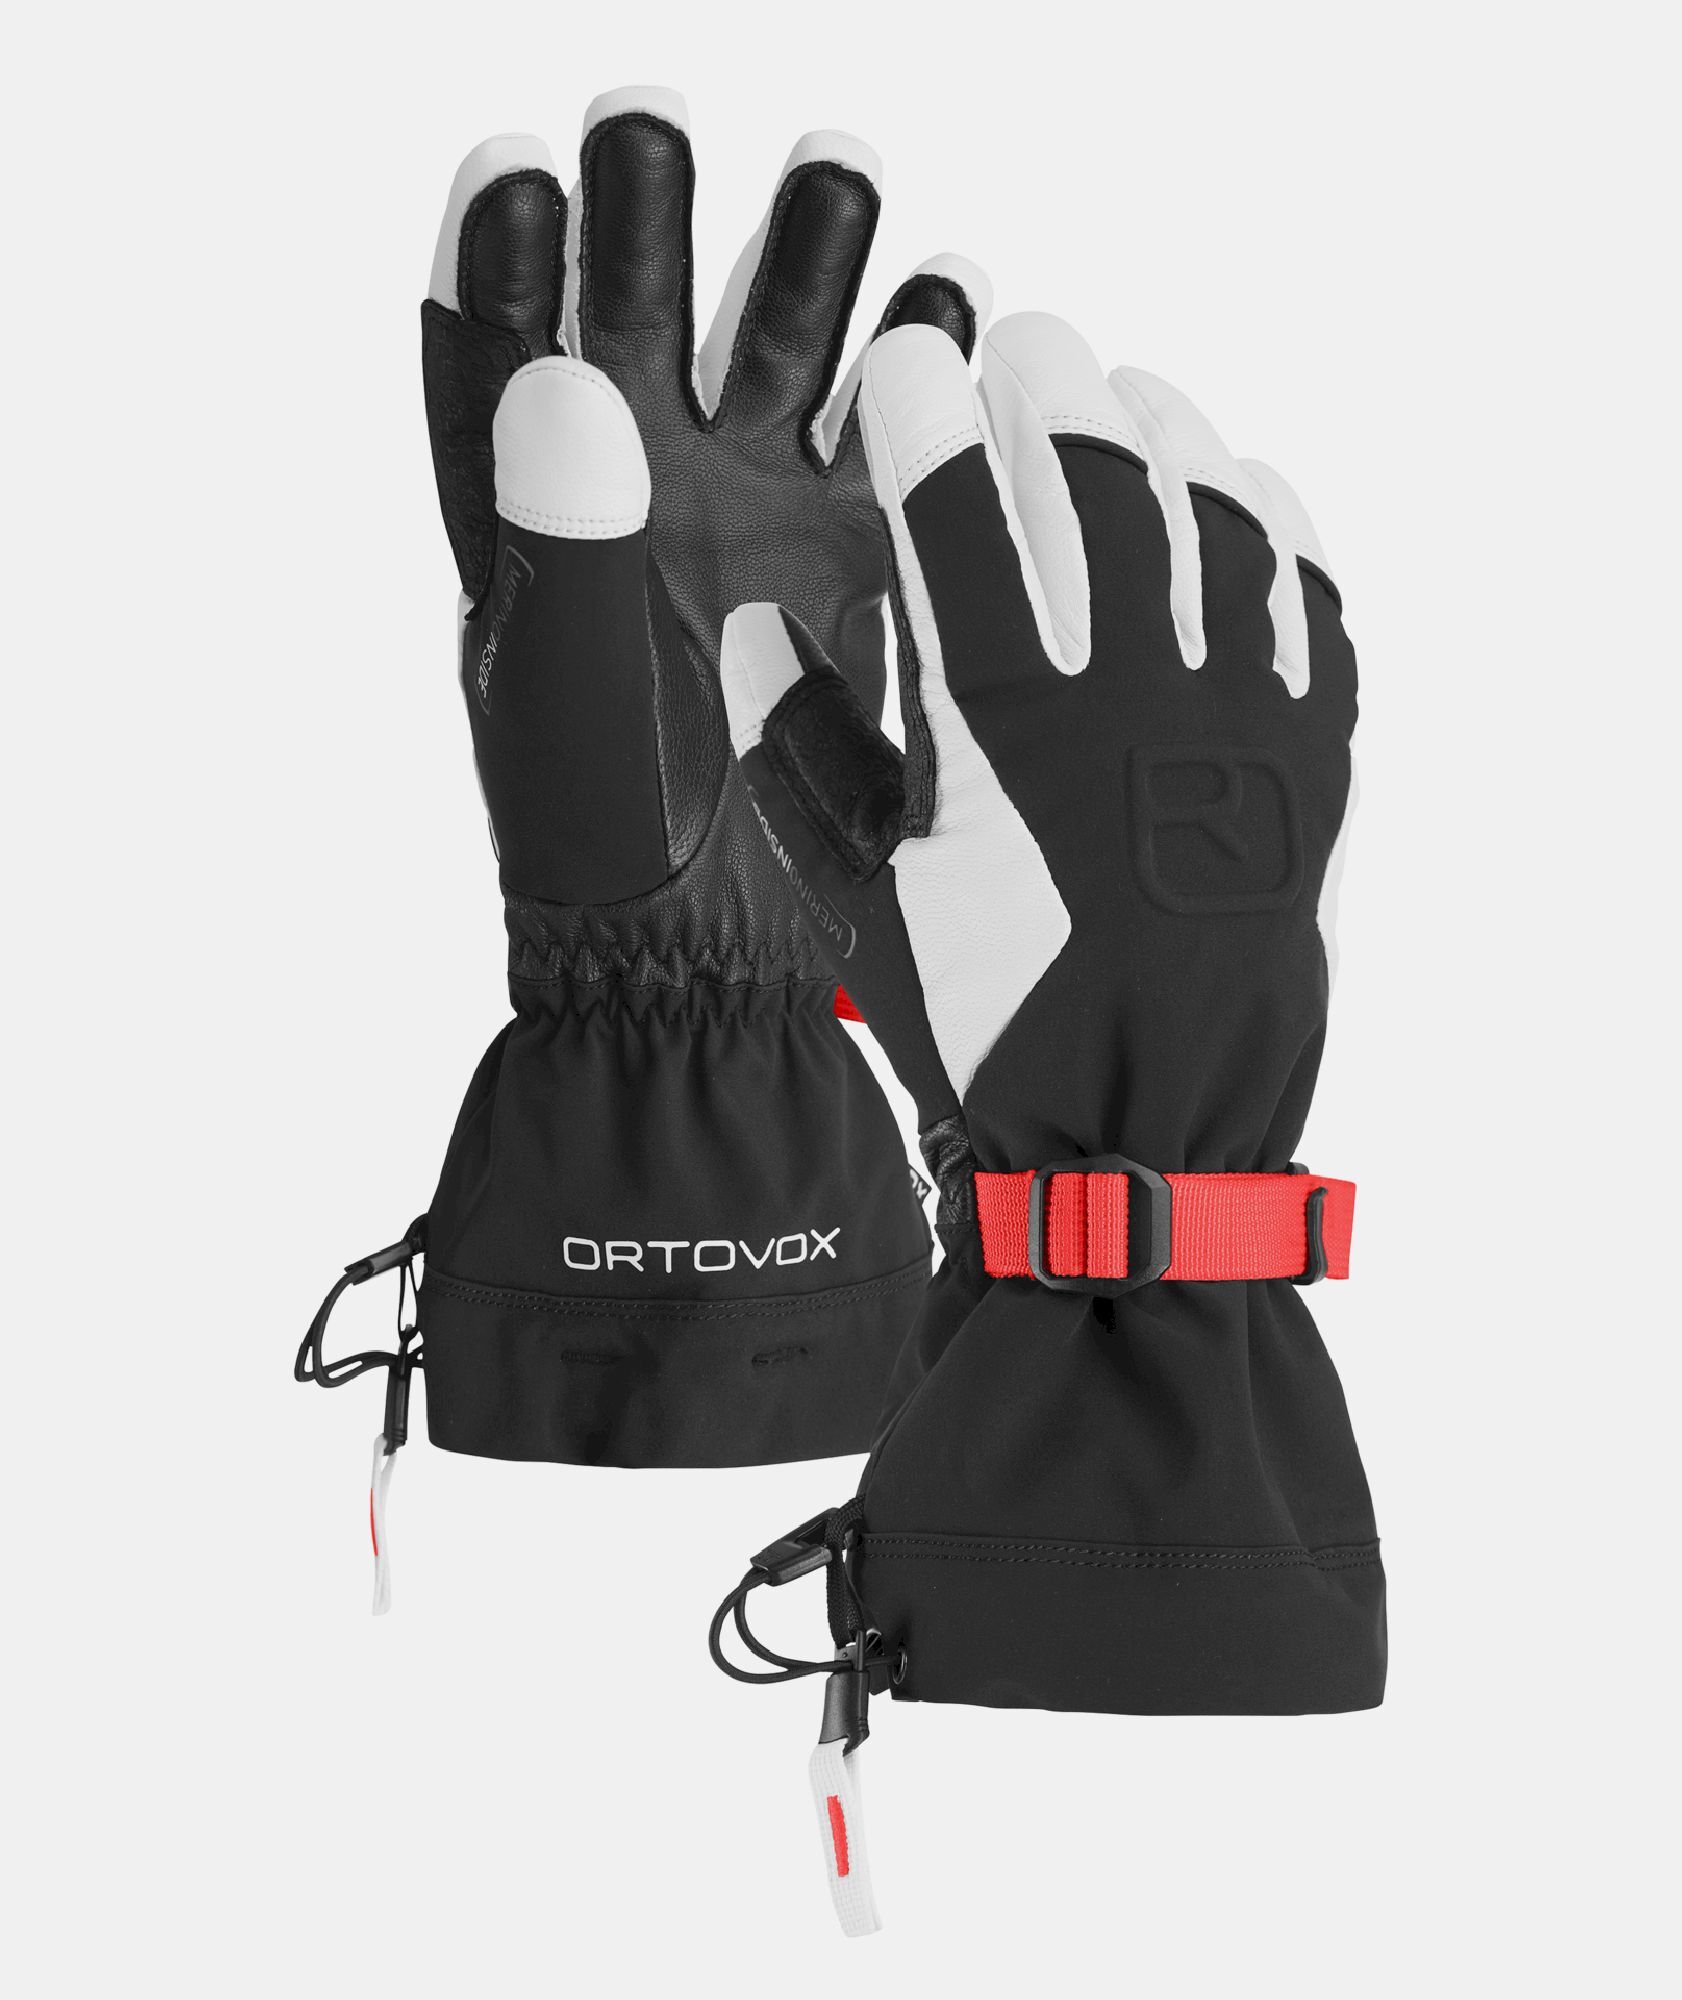 Ortovox Merino Freeride Glove - Ski gloves - Women's